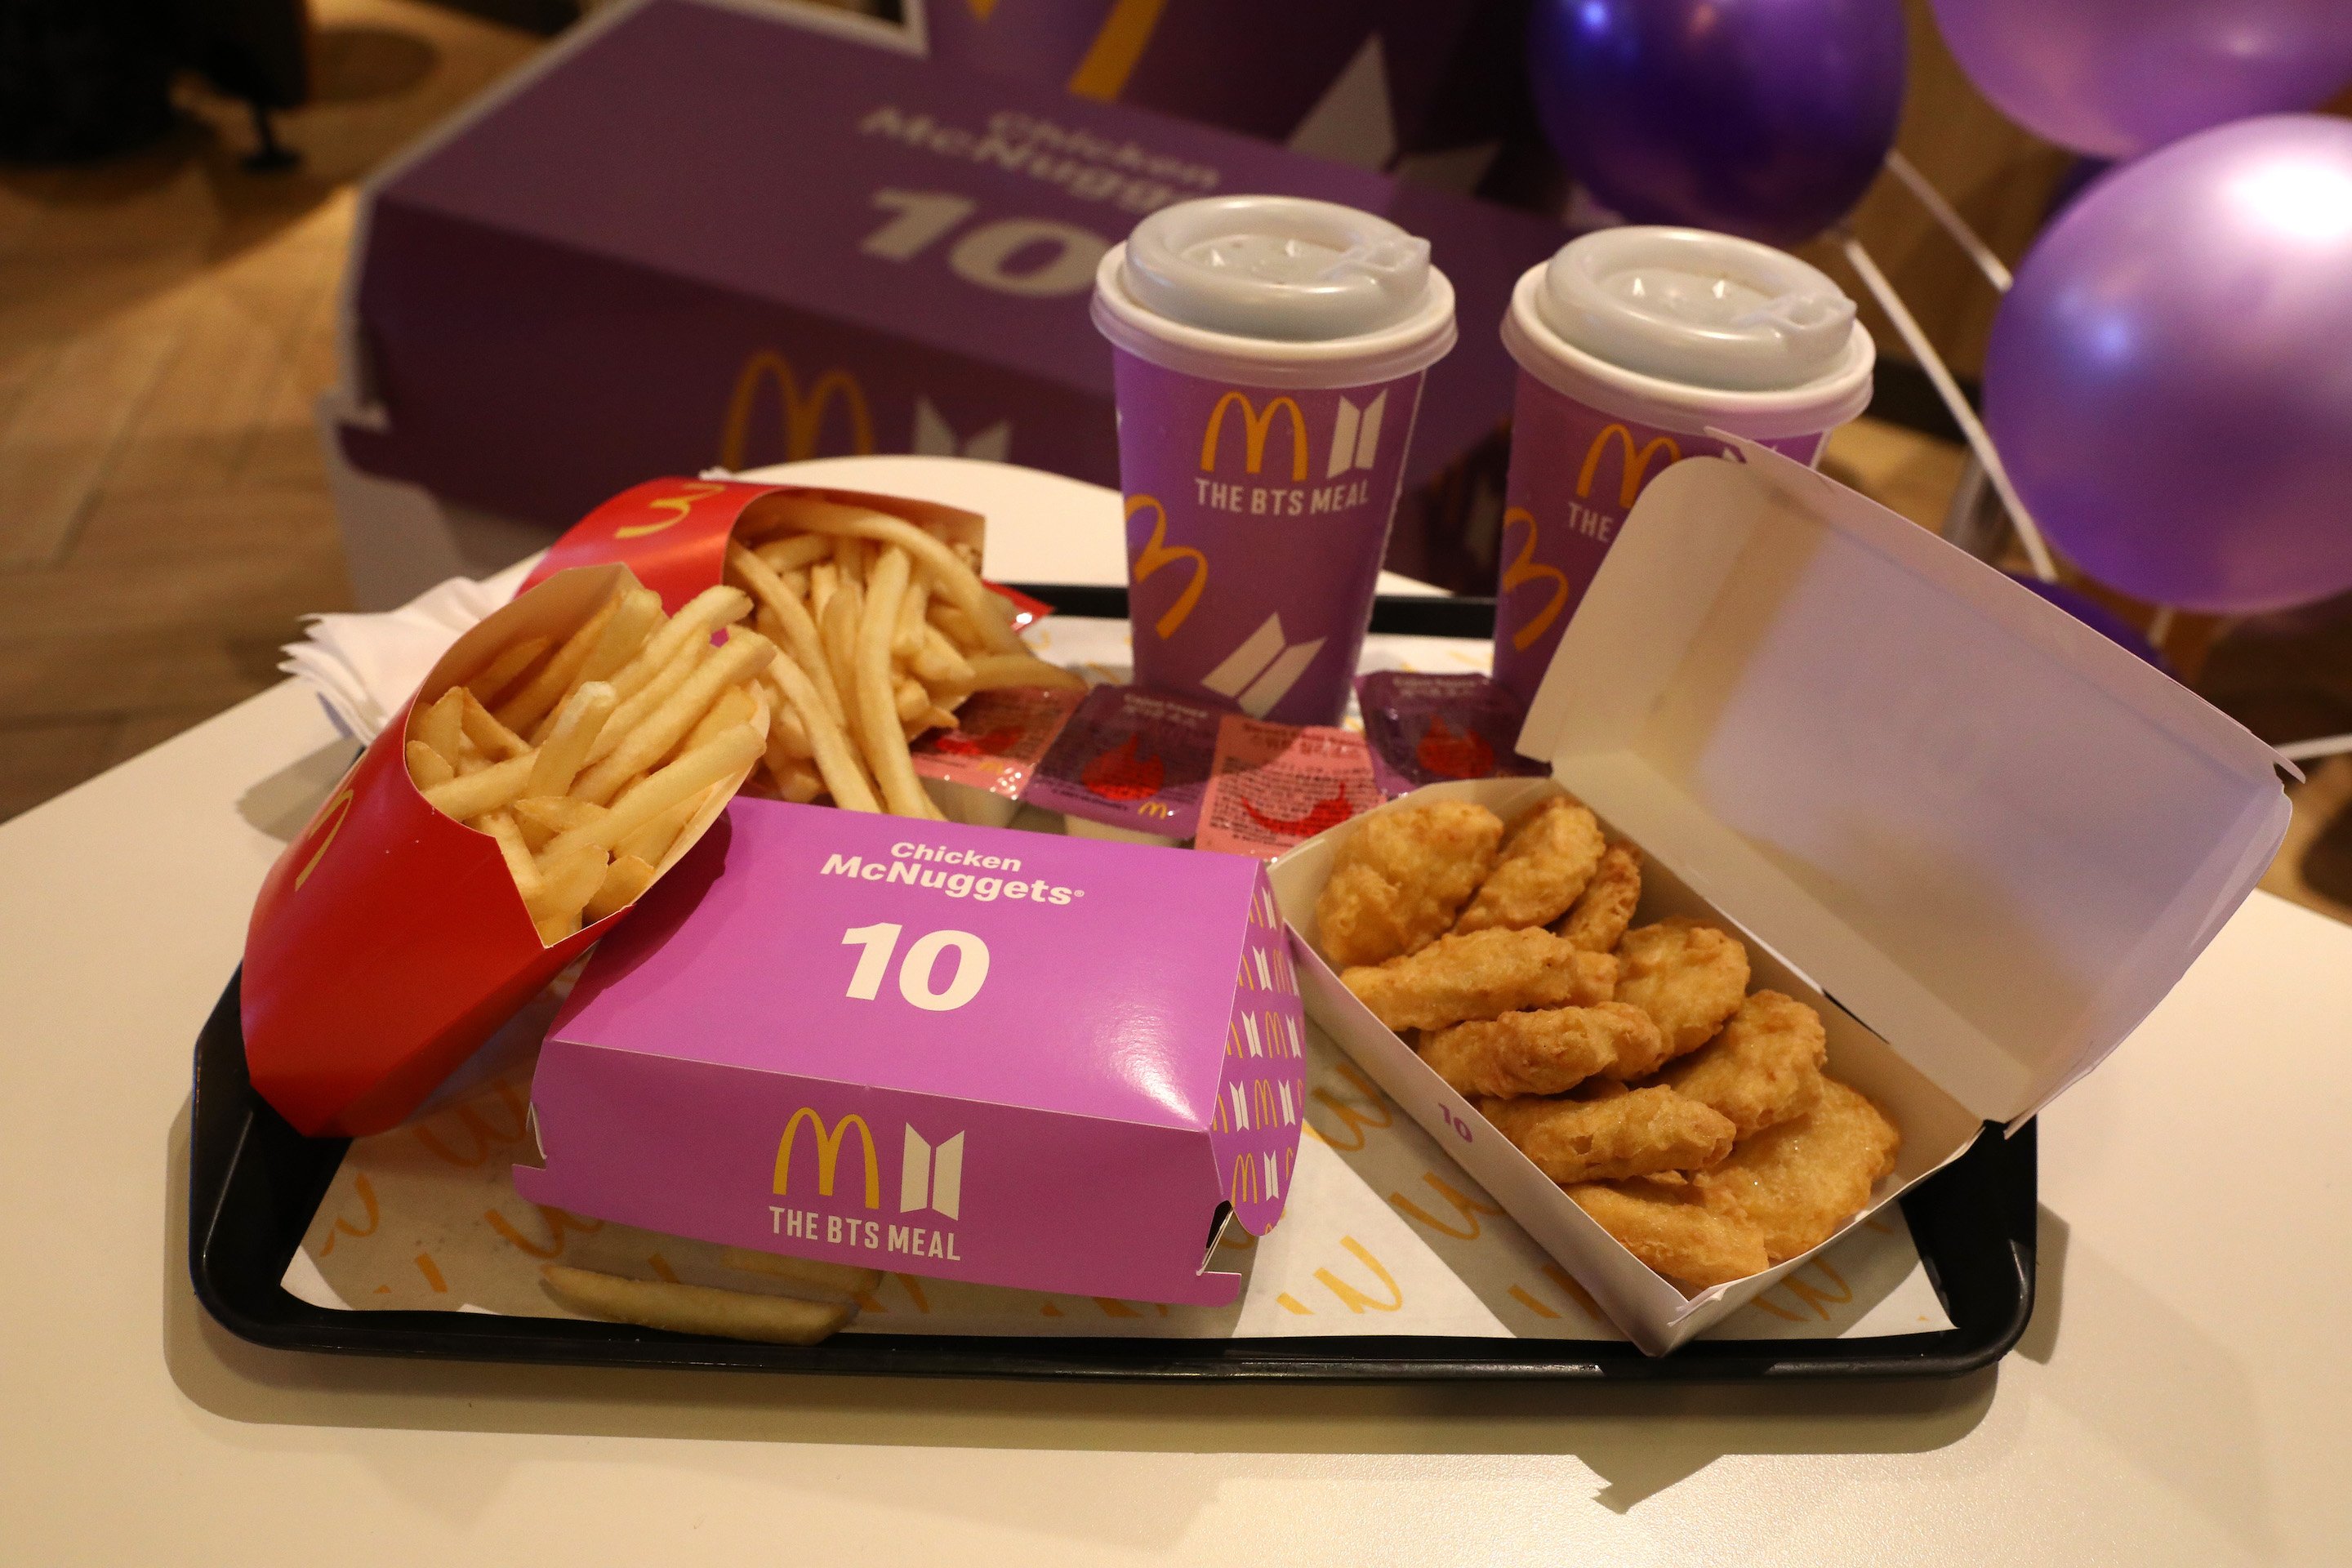 McDonald's BTS meal in Seoul, South Korea